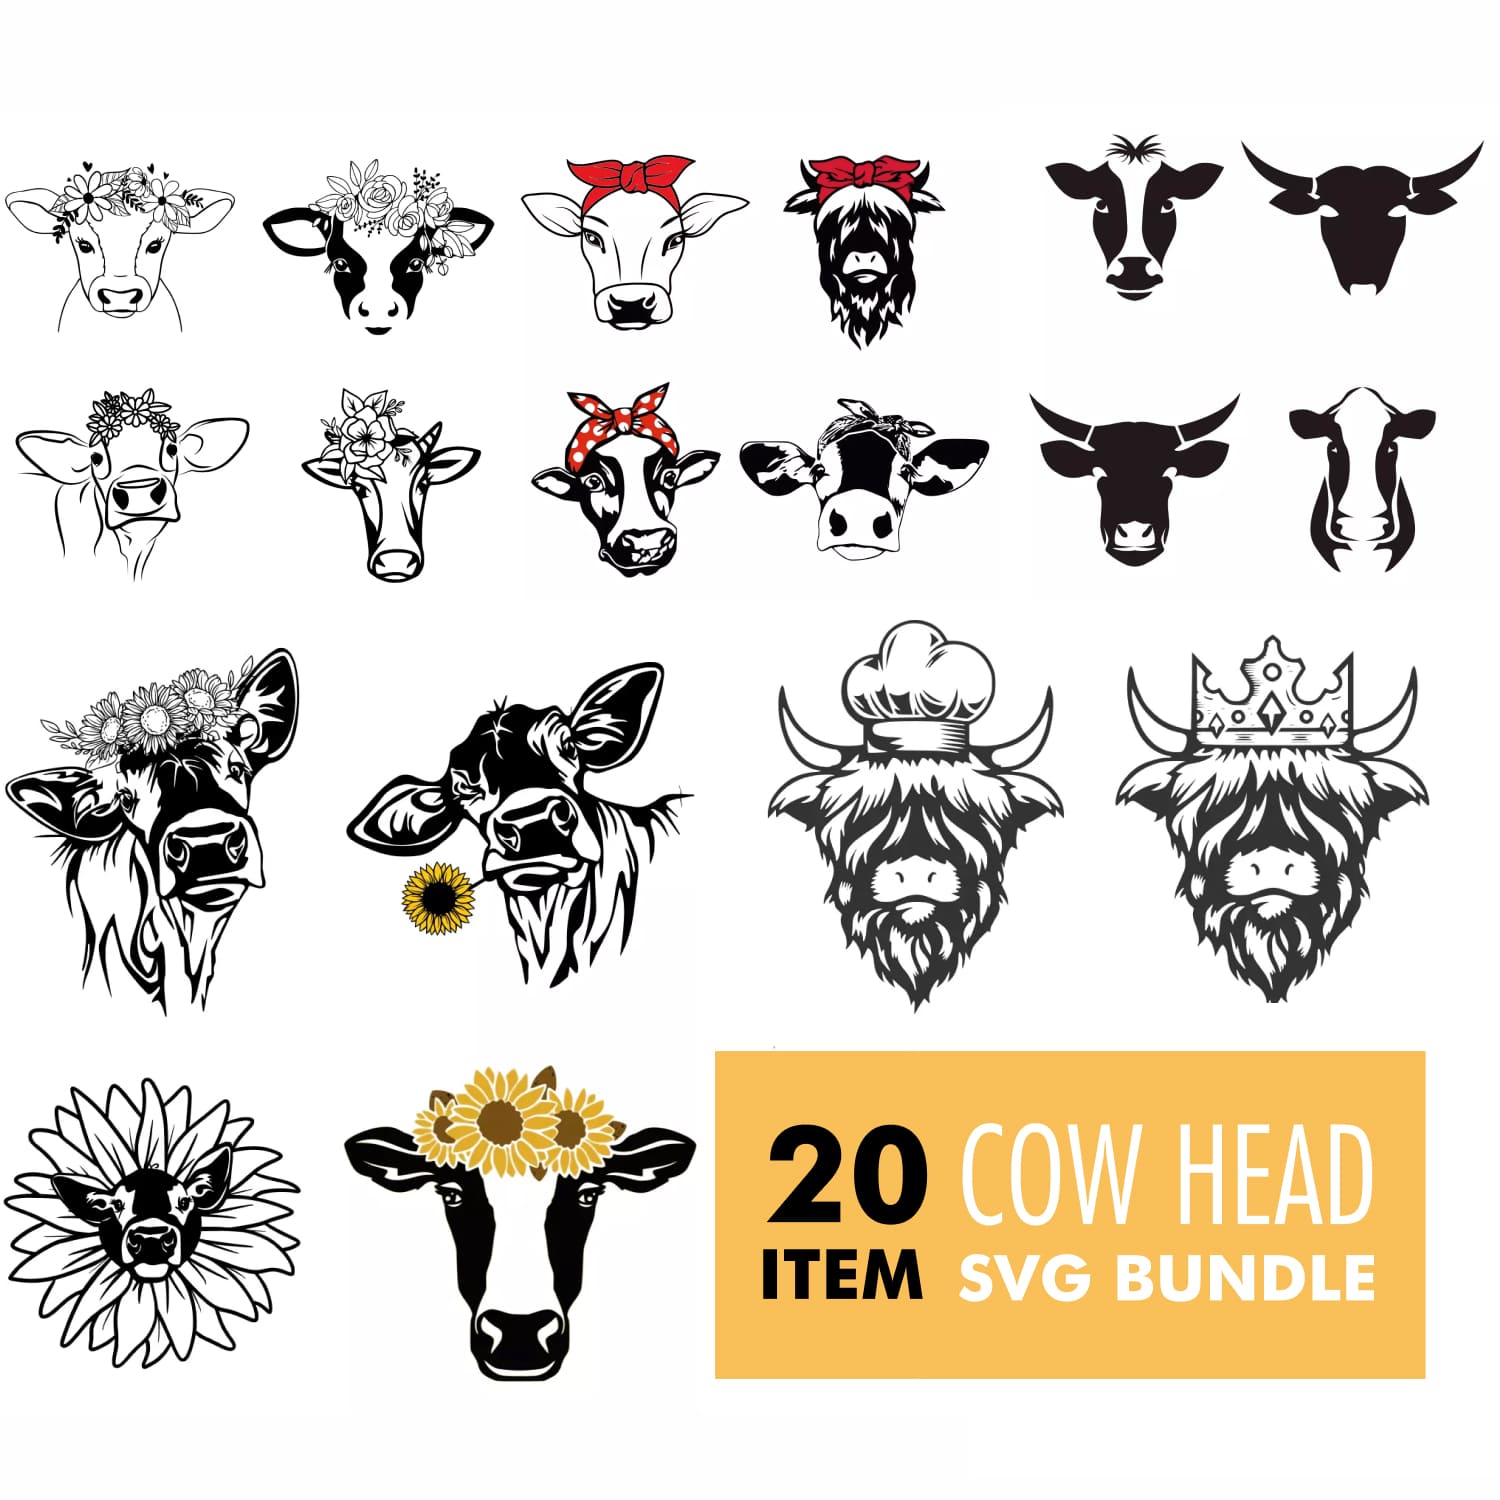 20 cow head svg bundle.